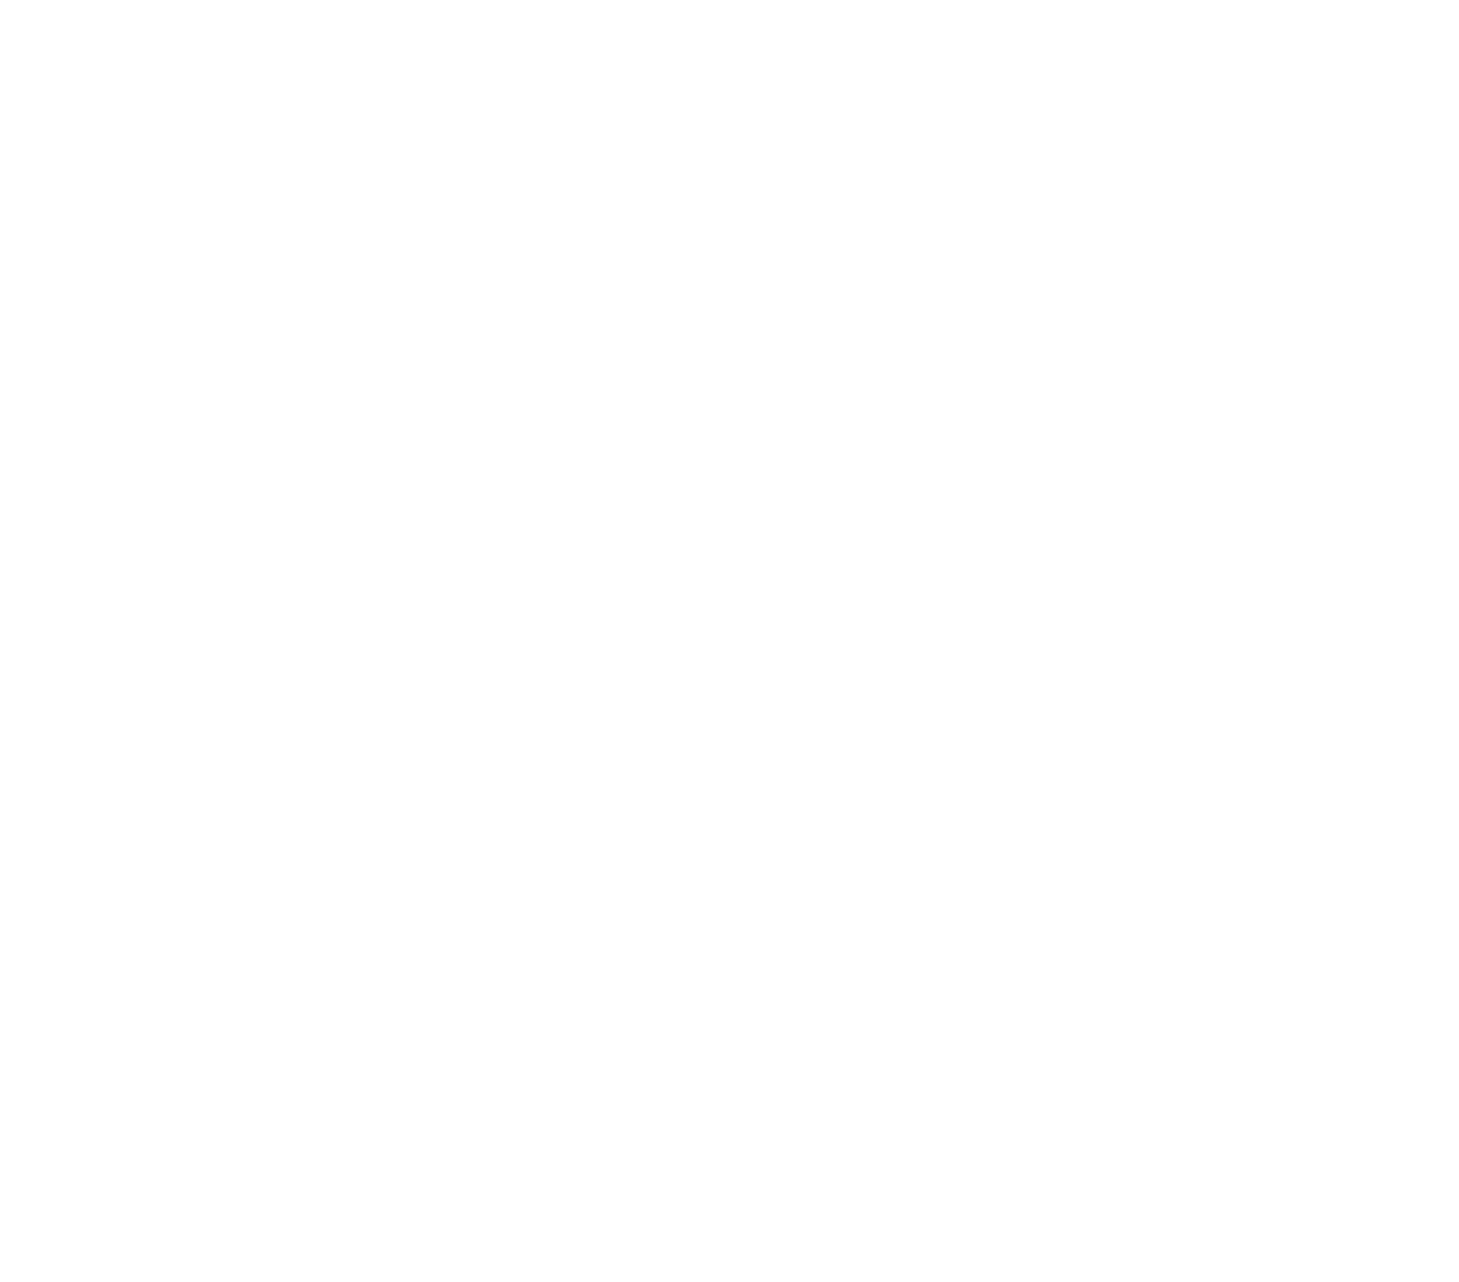 erosion control technology council